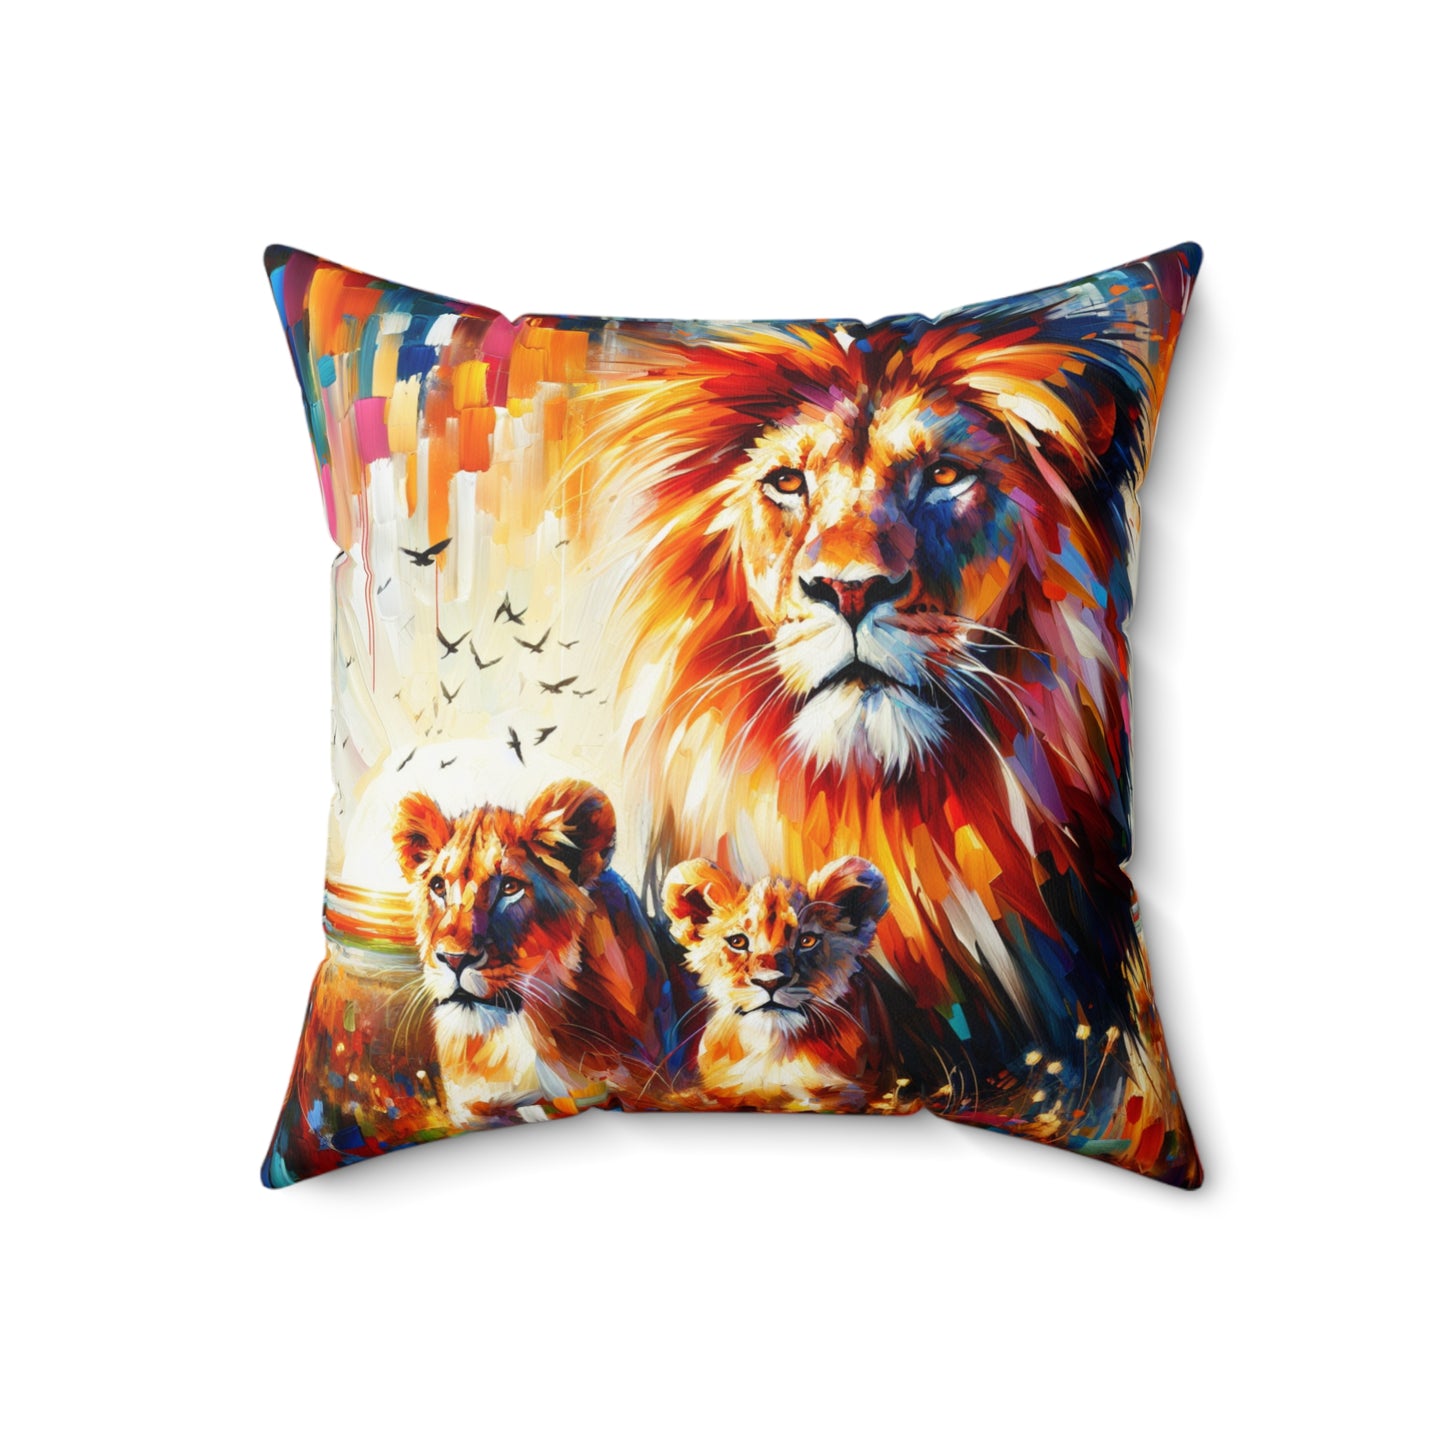 Lion Family - Square Pillow